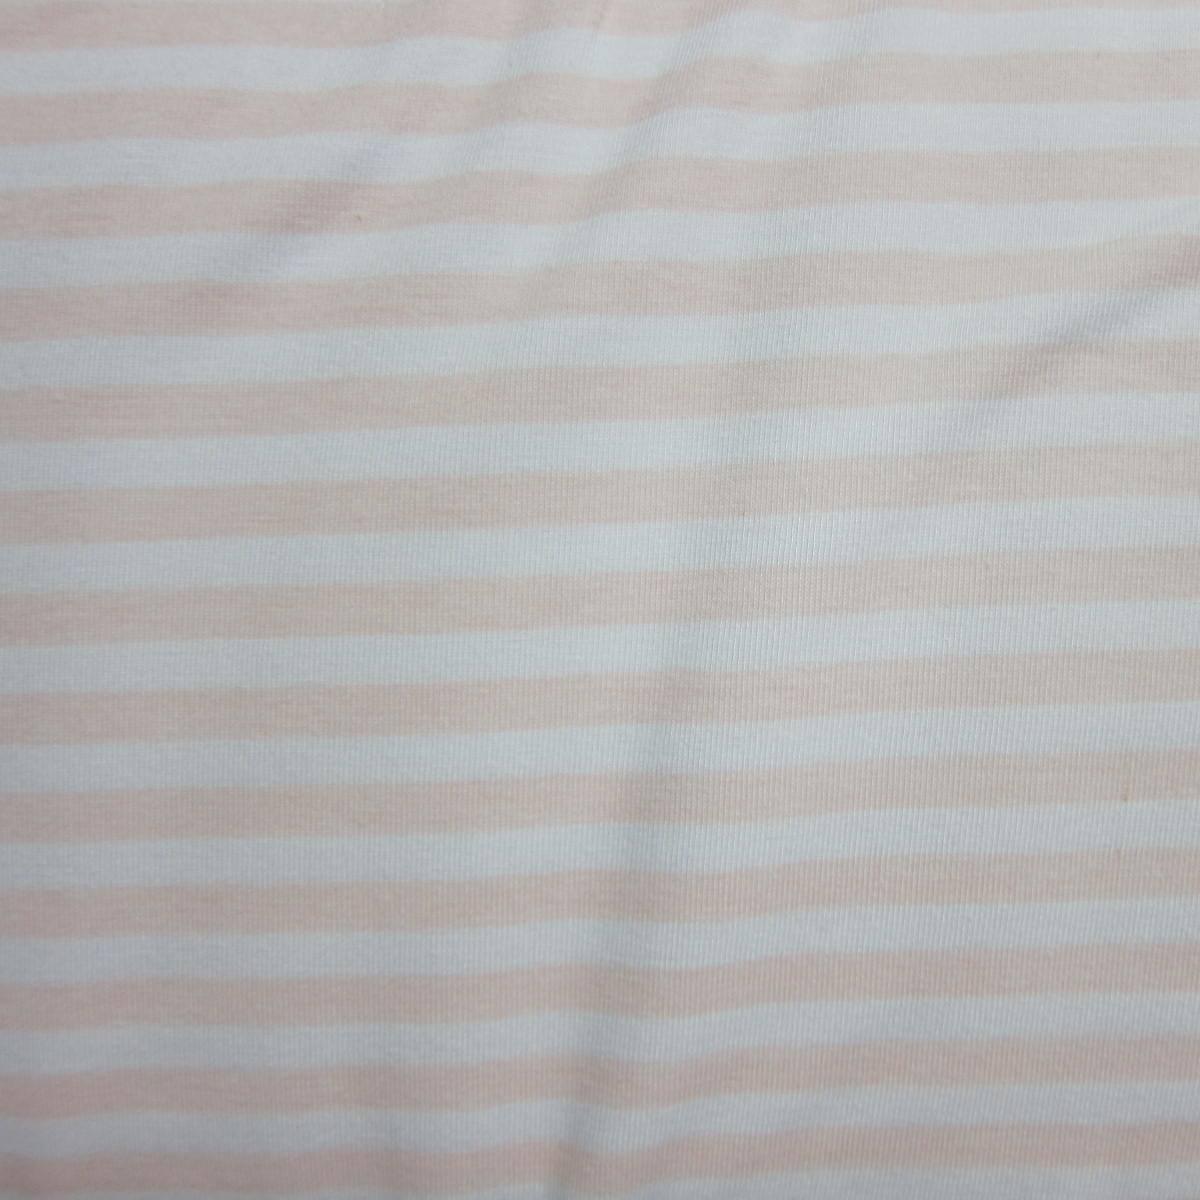 Peach and White 1/4" Stripe on Cotton/Spandex Jersey